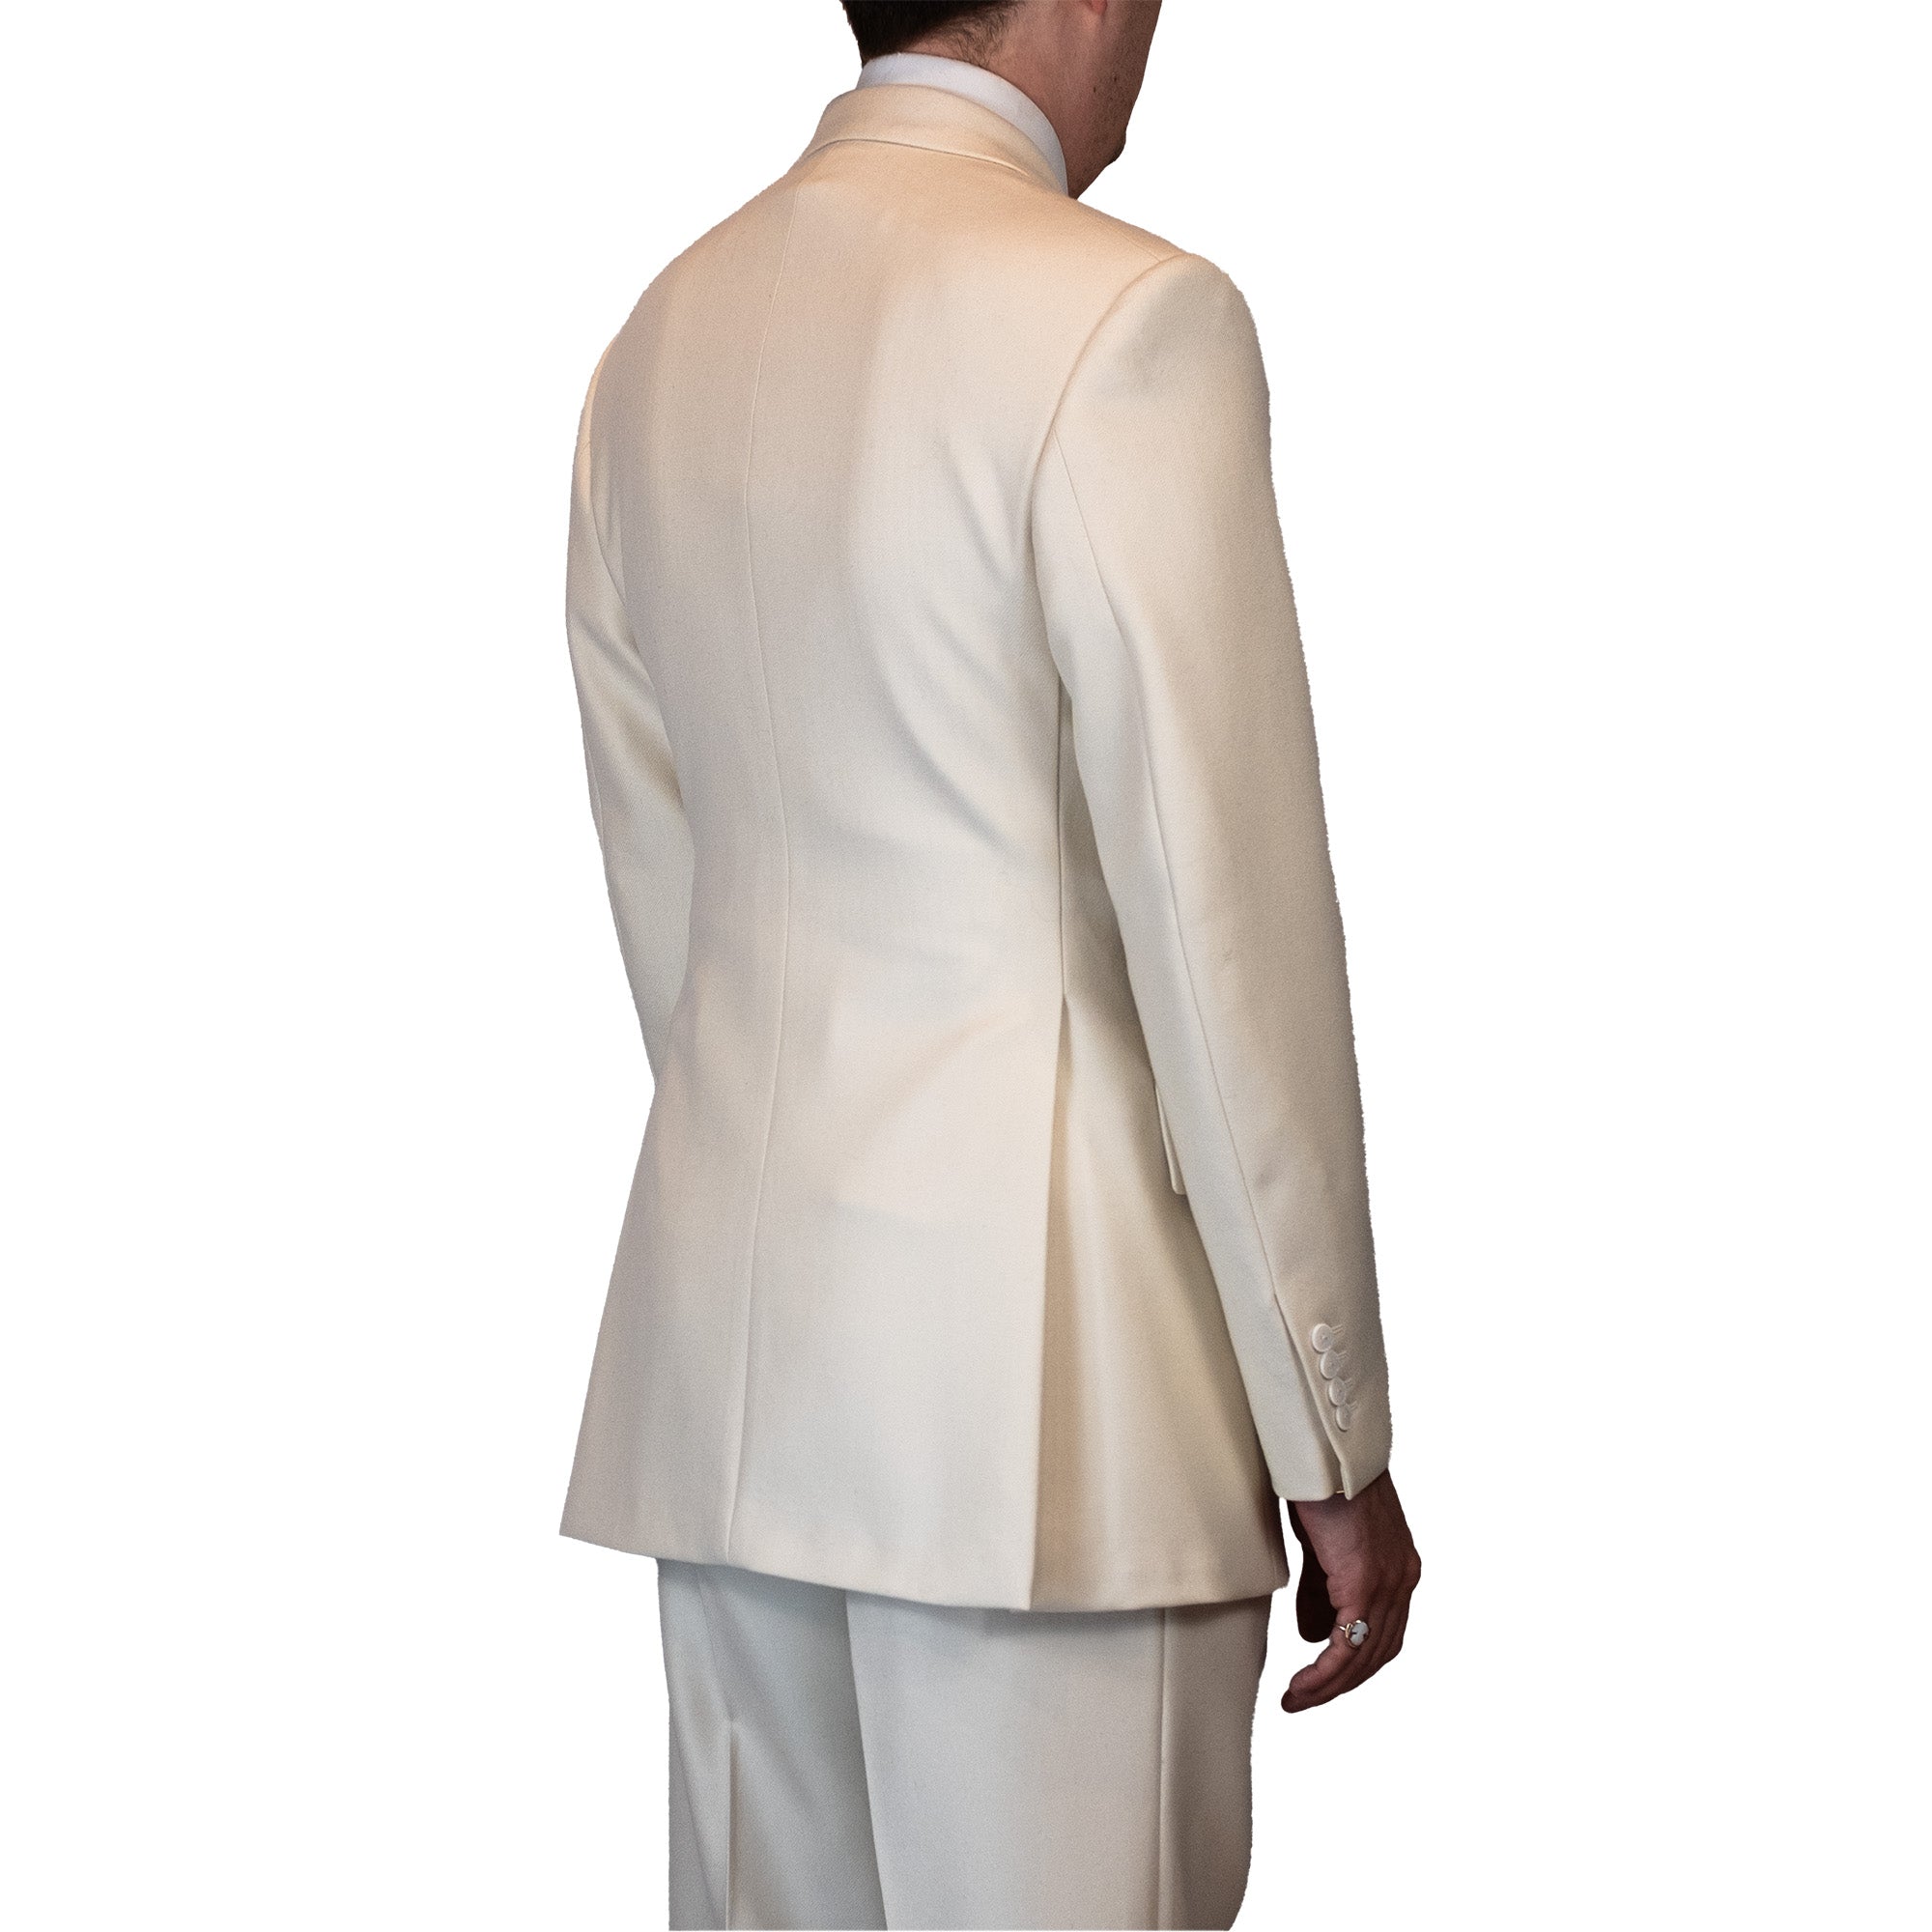 Suit - White Cricket Flannel